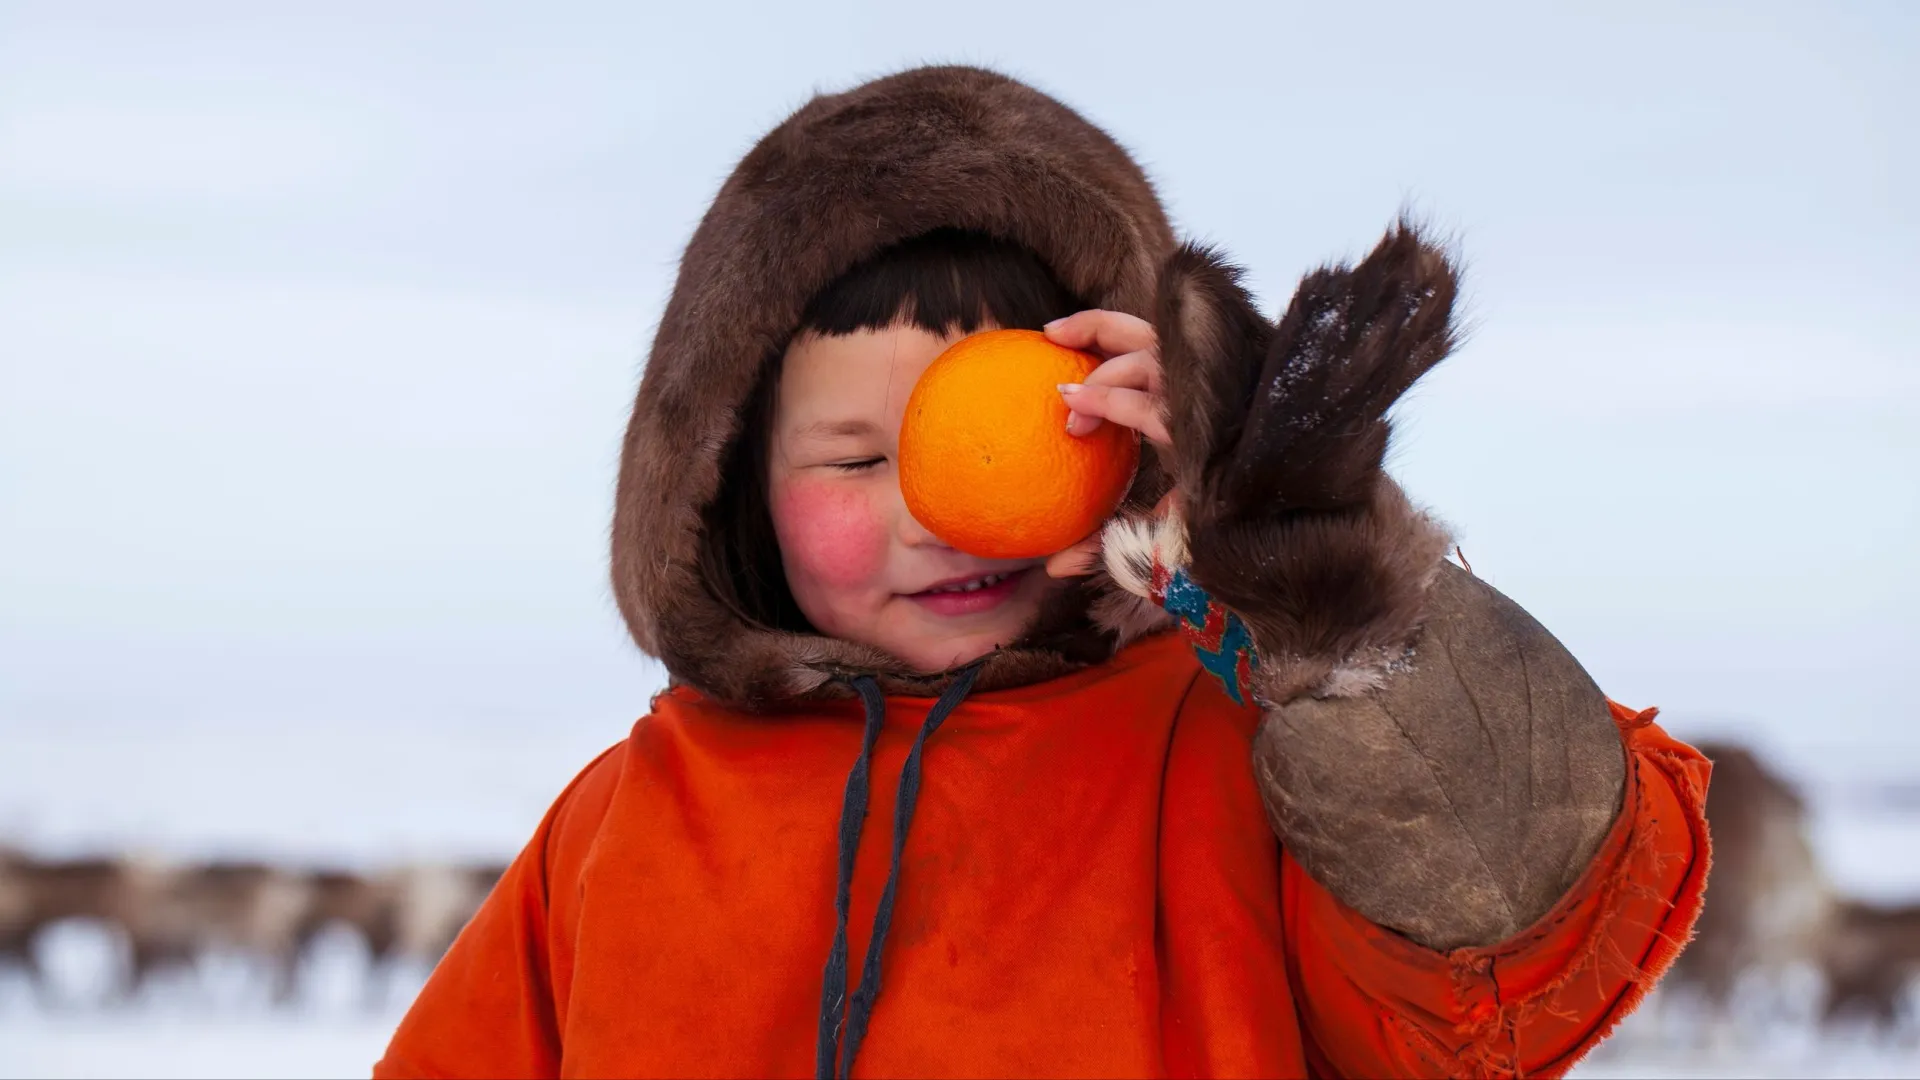 Оранжевый дарит радость. Фото: evgenii mitroshin / Shutterstock / Fotodom